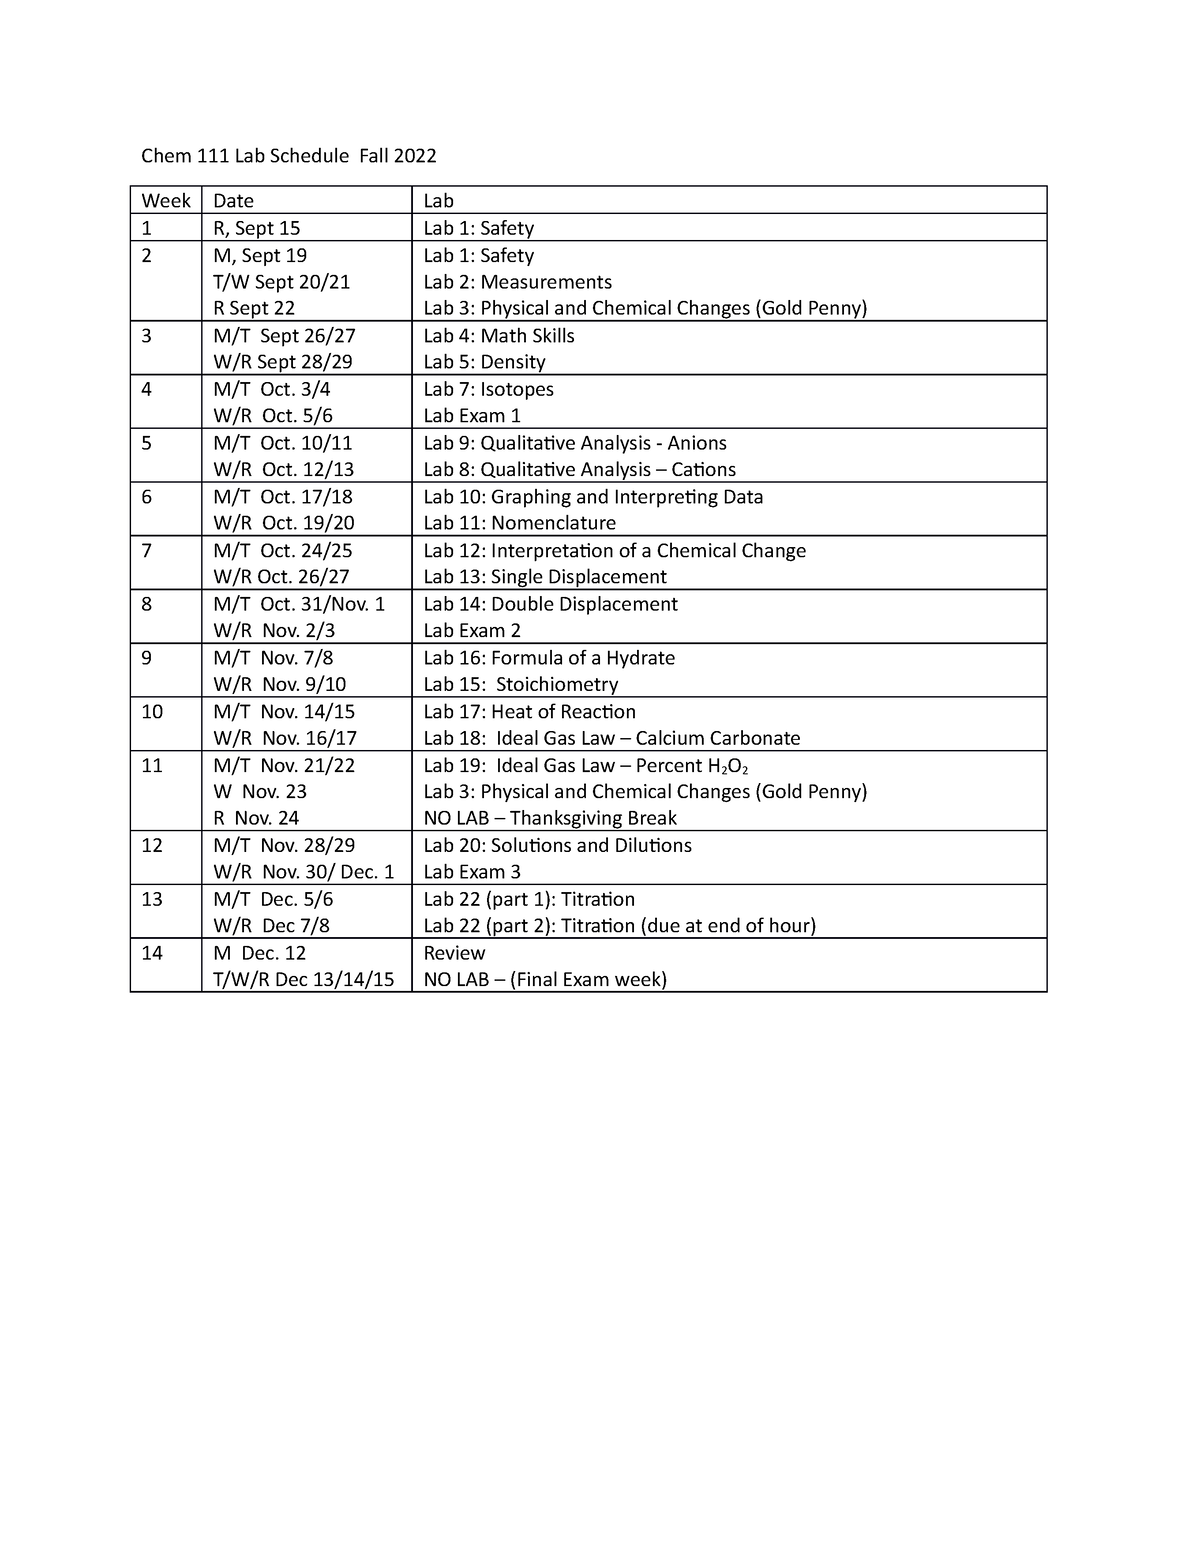 Lab Schedule Chem 111 Fall 2022 2 Chem 111 Lab Schedule Fall 2022